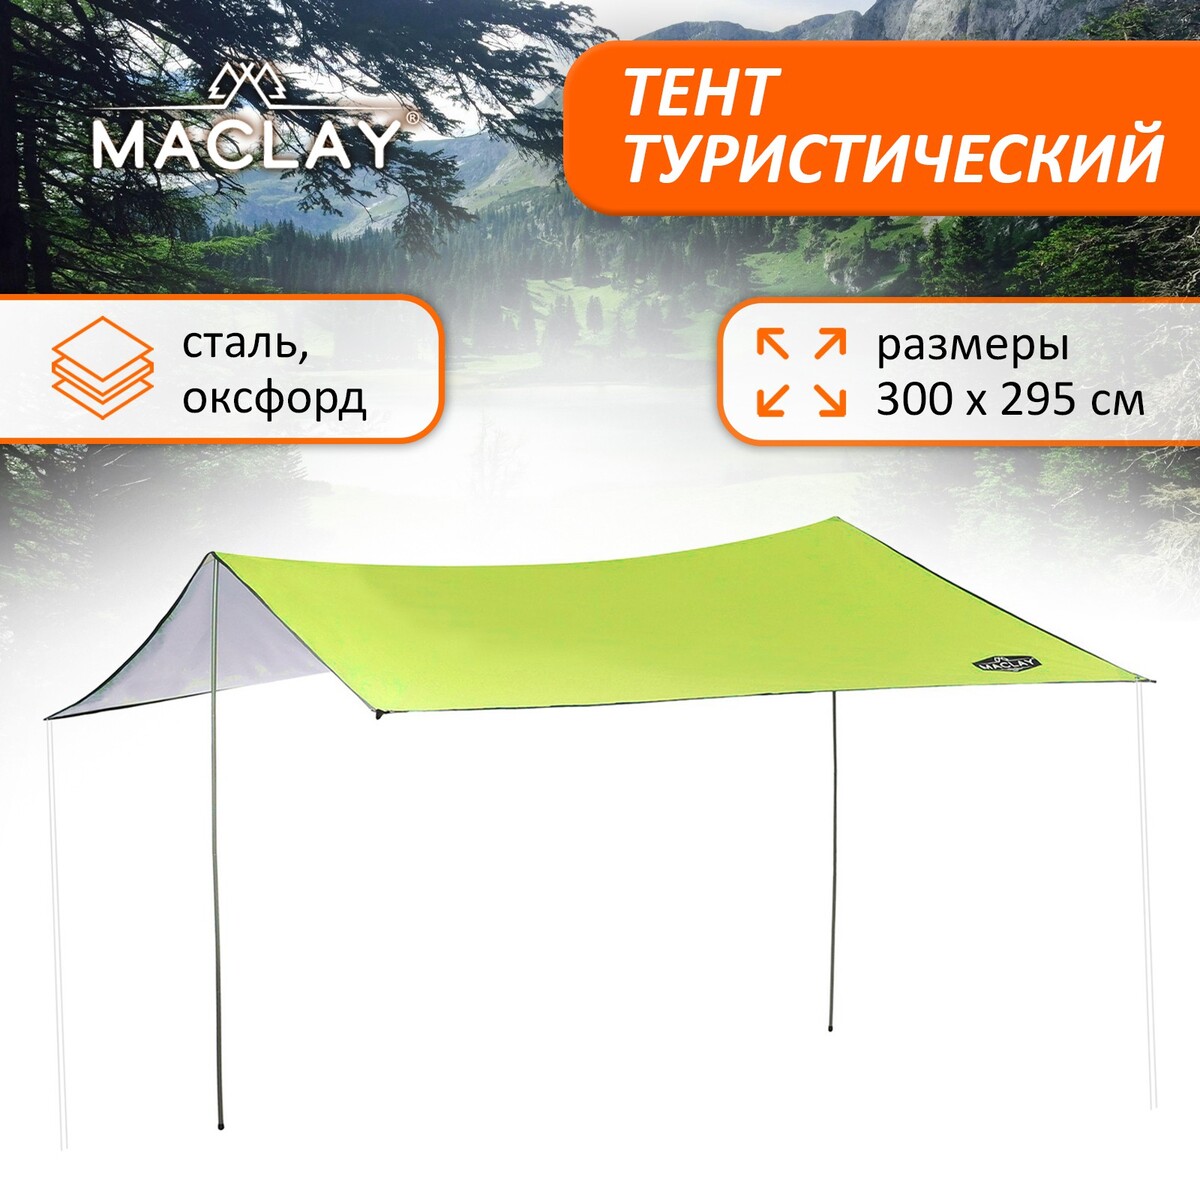 Тент туристический maclay, 300х295 см шатер туристический maclay 210т 2000 mm pu 350х350х245 см